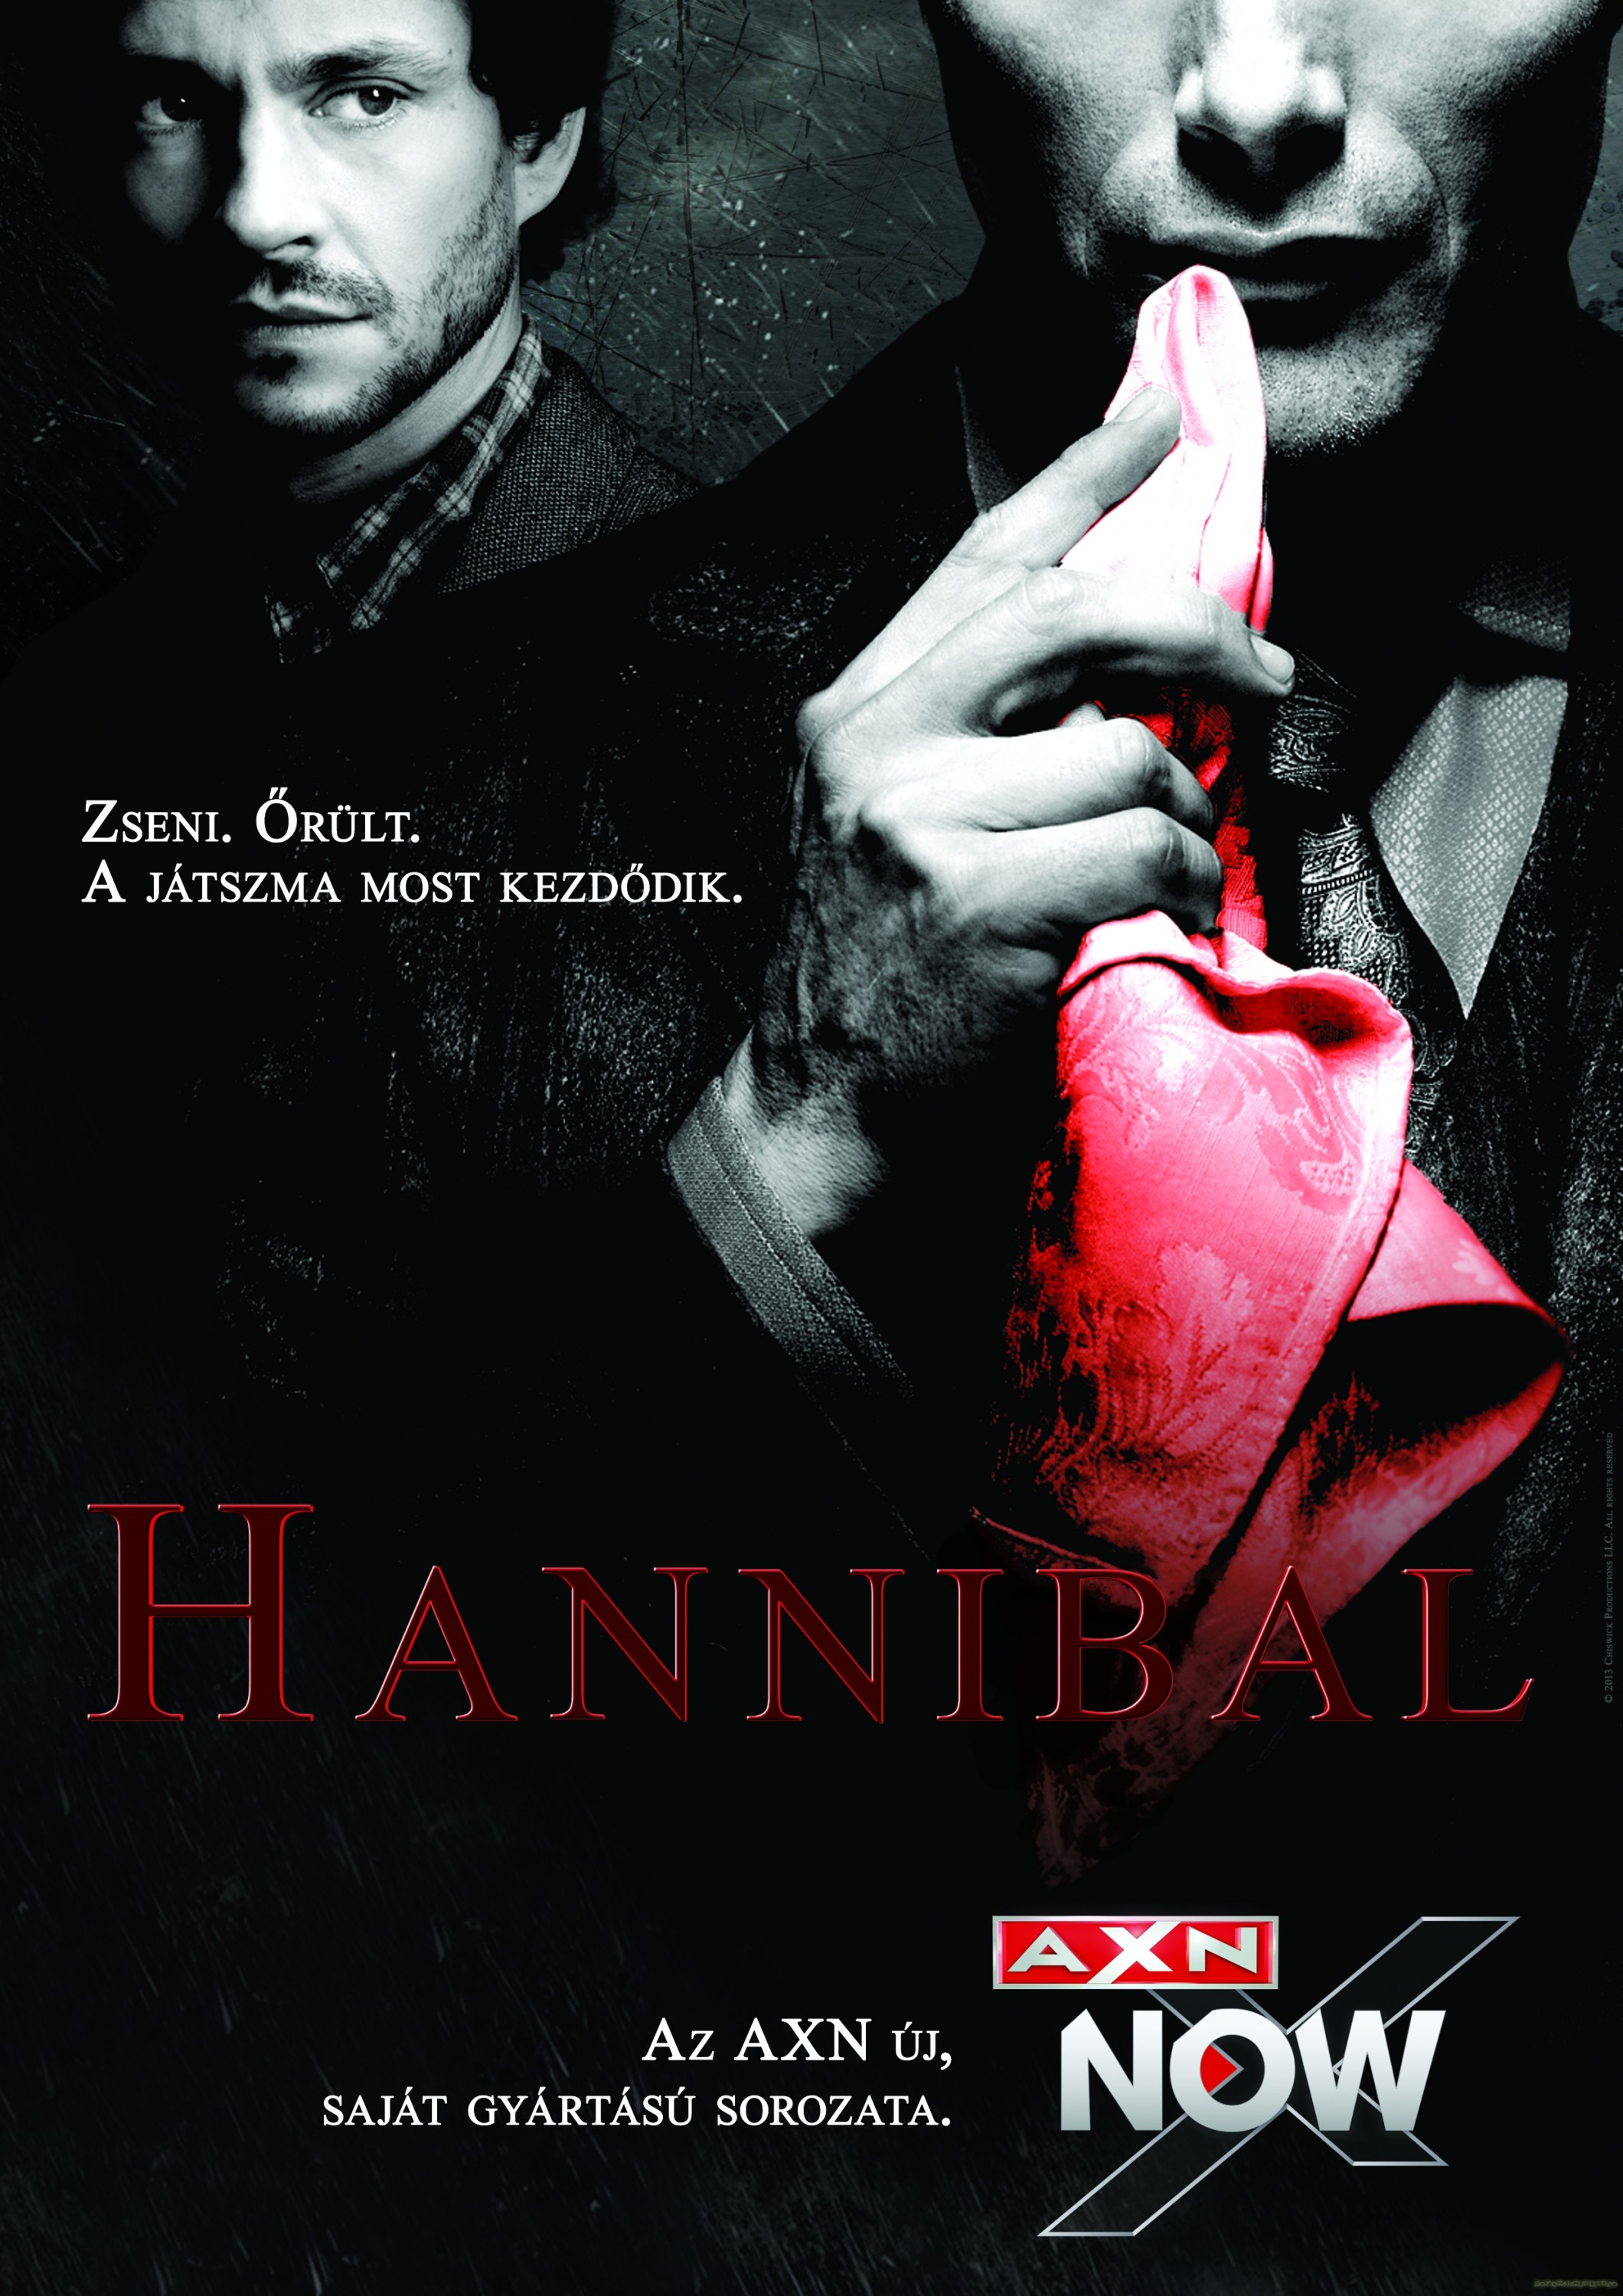 Mega Sized TV Poster Image for Hannibal (#4 of 12)